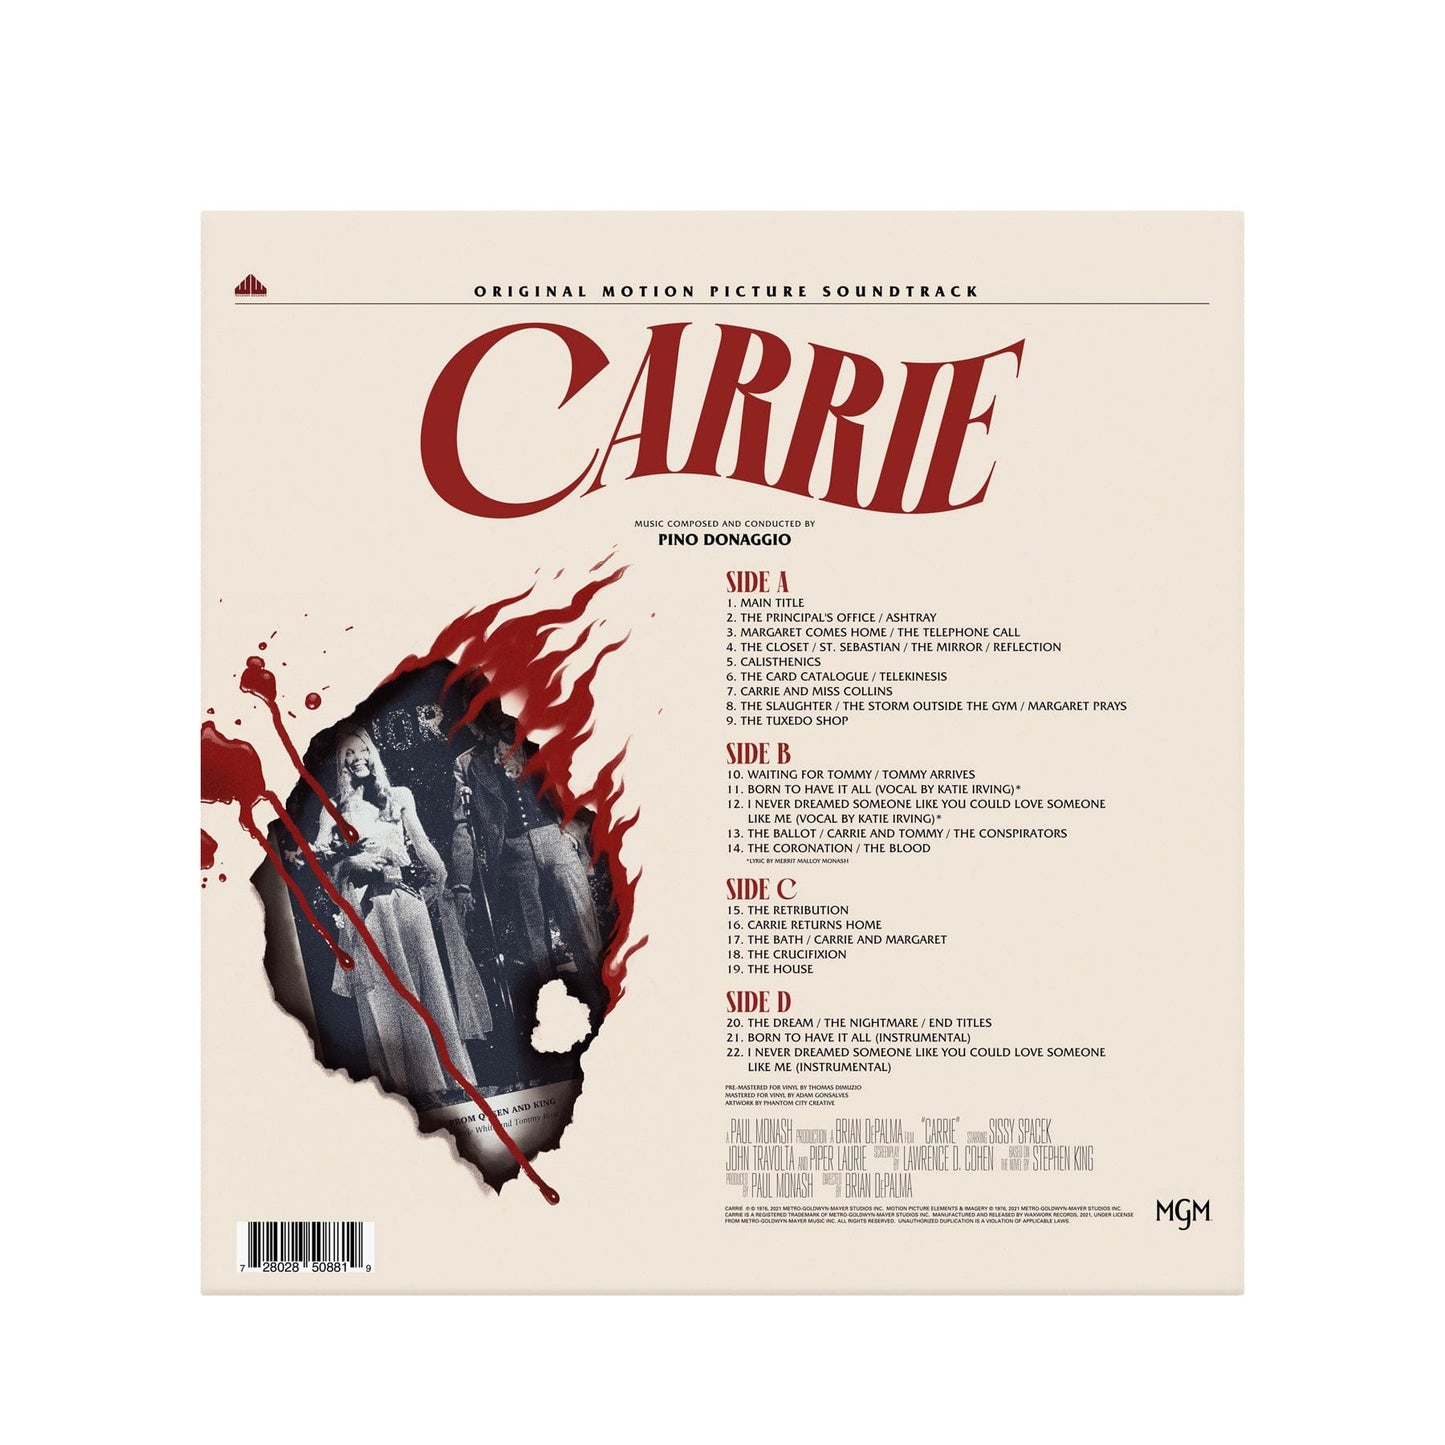 WW118 - Pino Donaggio - Carrie Original Soundtrack